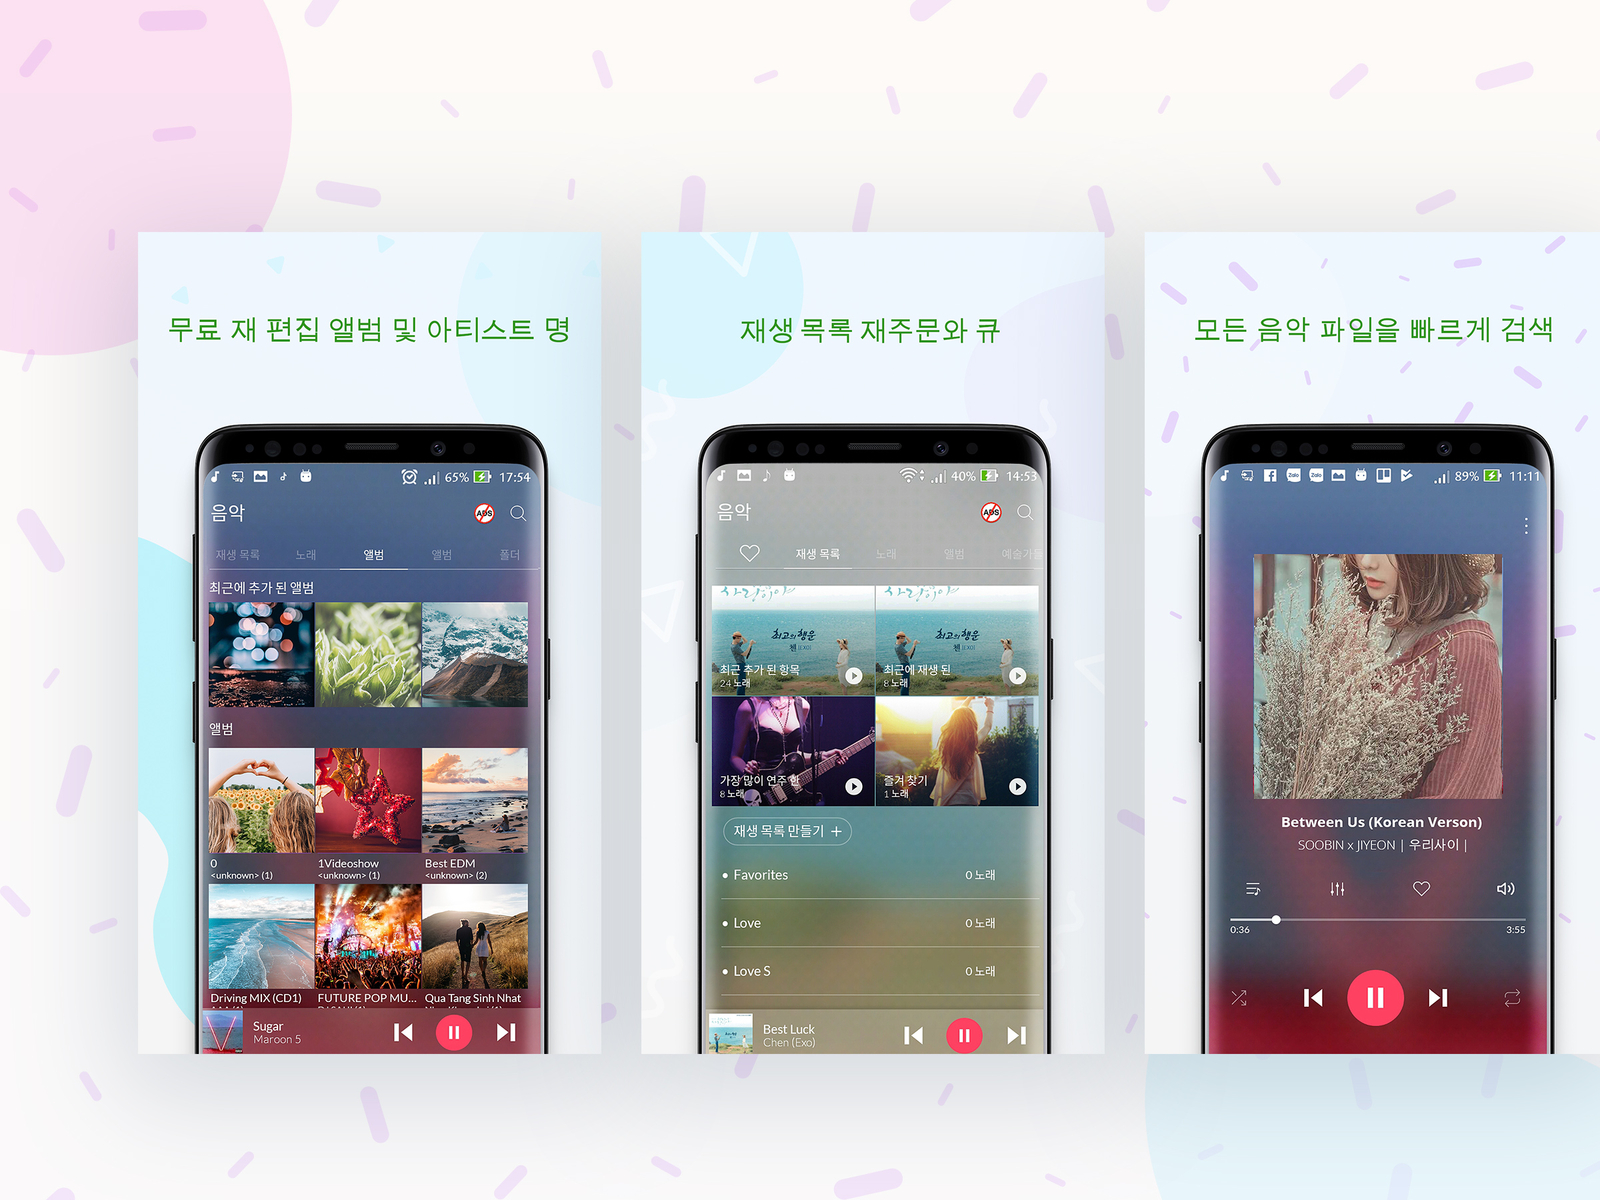 Samsung Music App Screenshot - Google Play korea by Cherri Vu on Dribbble